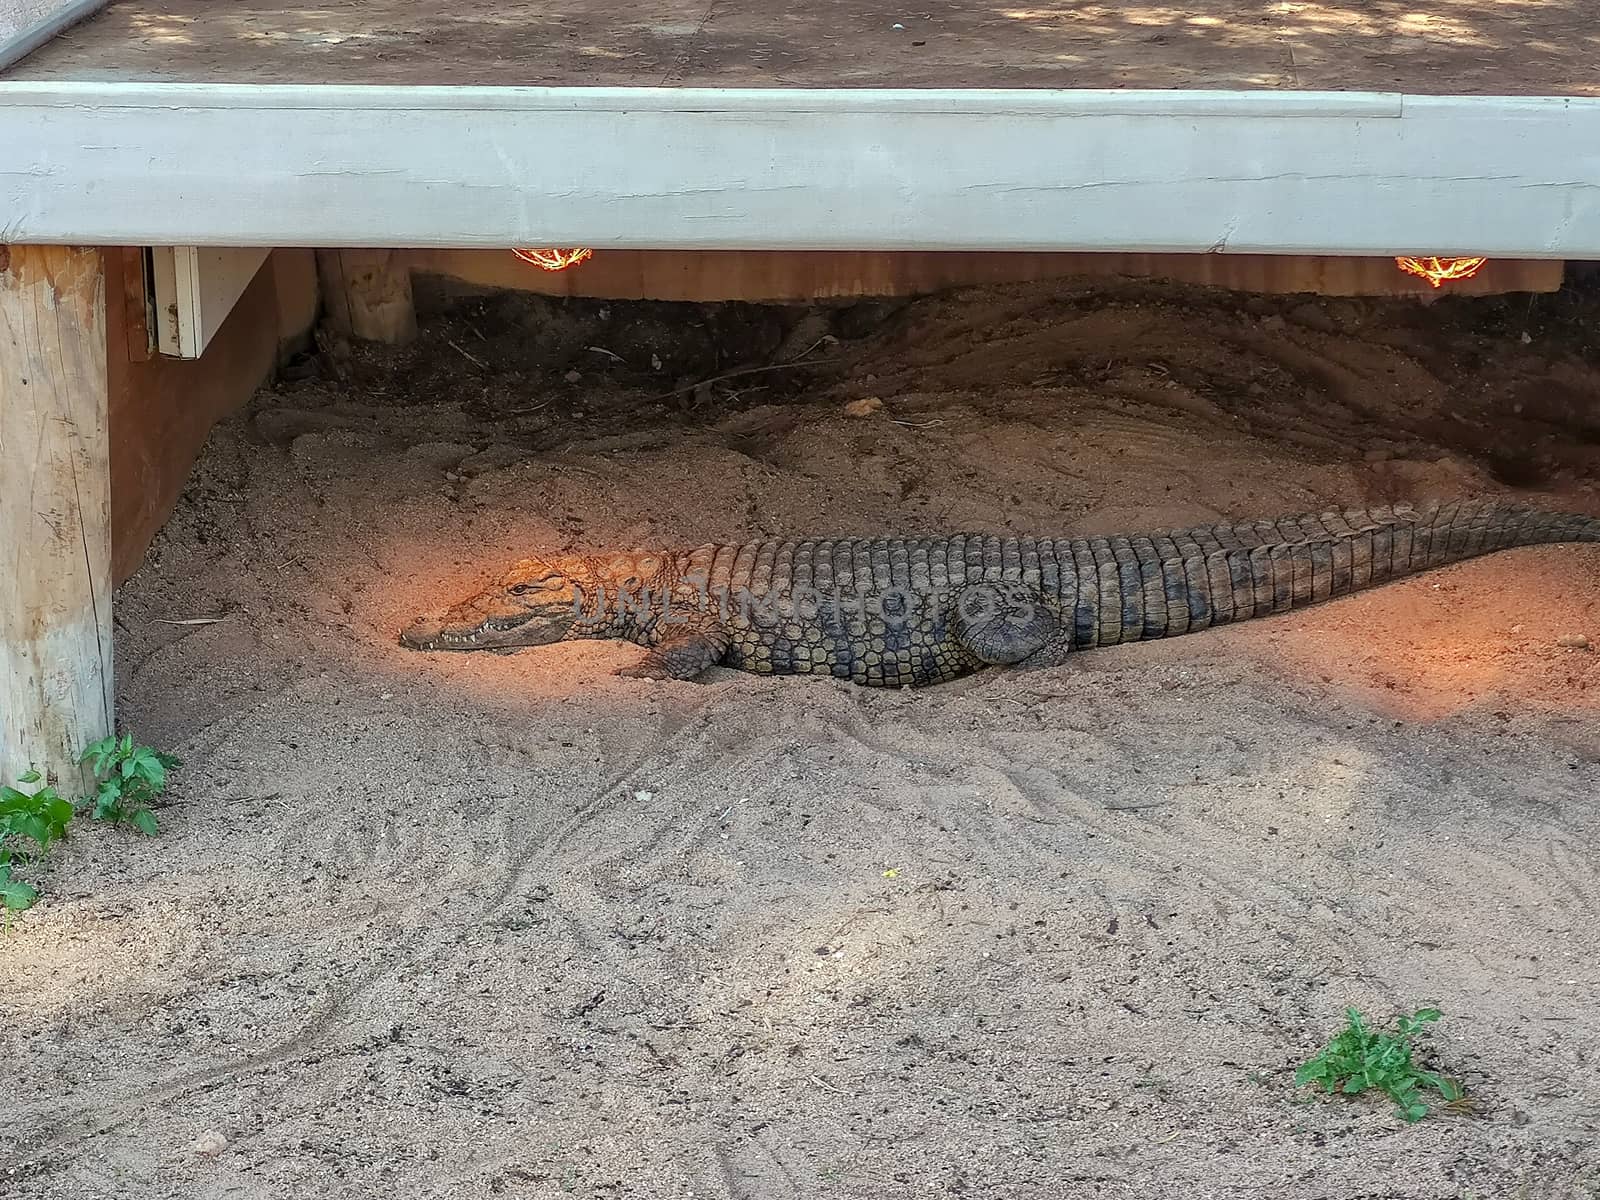 a medium crocodile sleeping in its hole